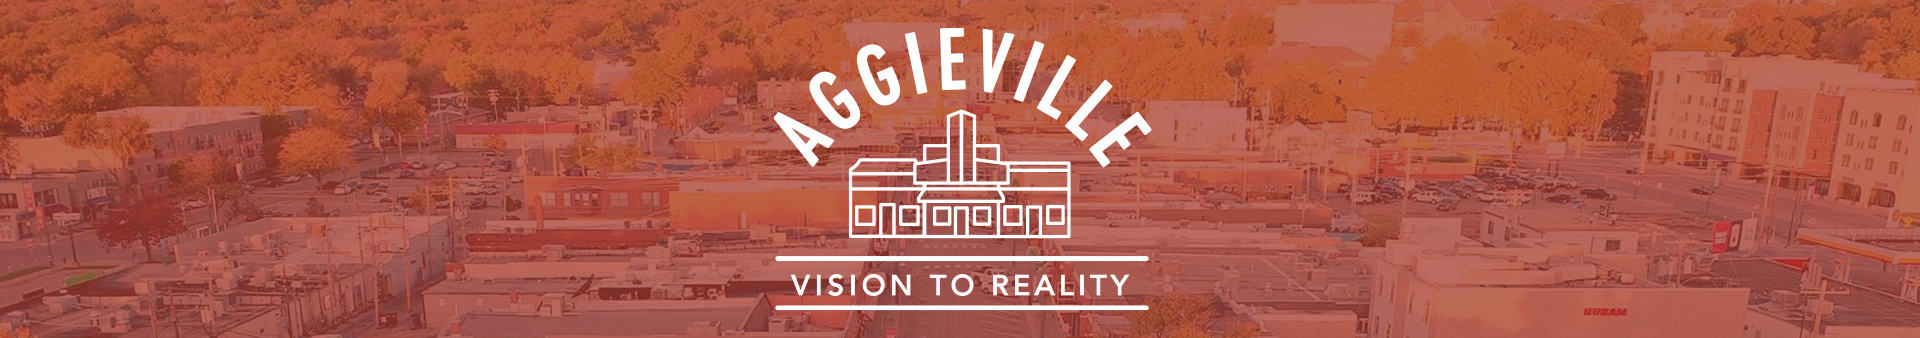 Aggieville, Manhattan, Kansas